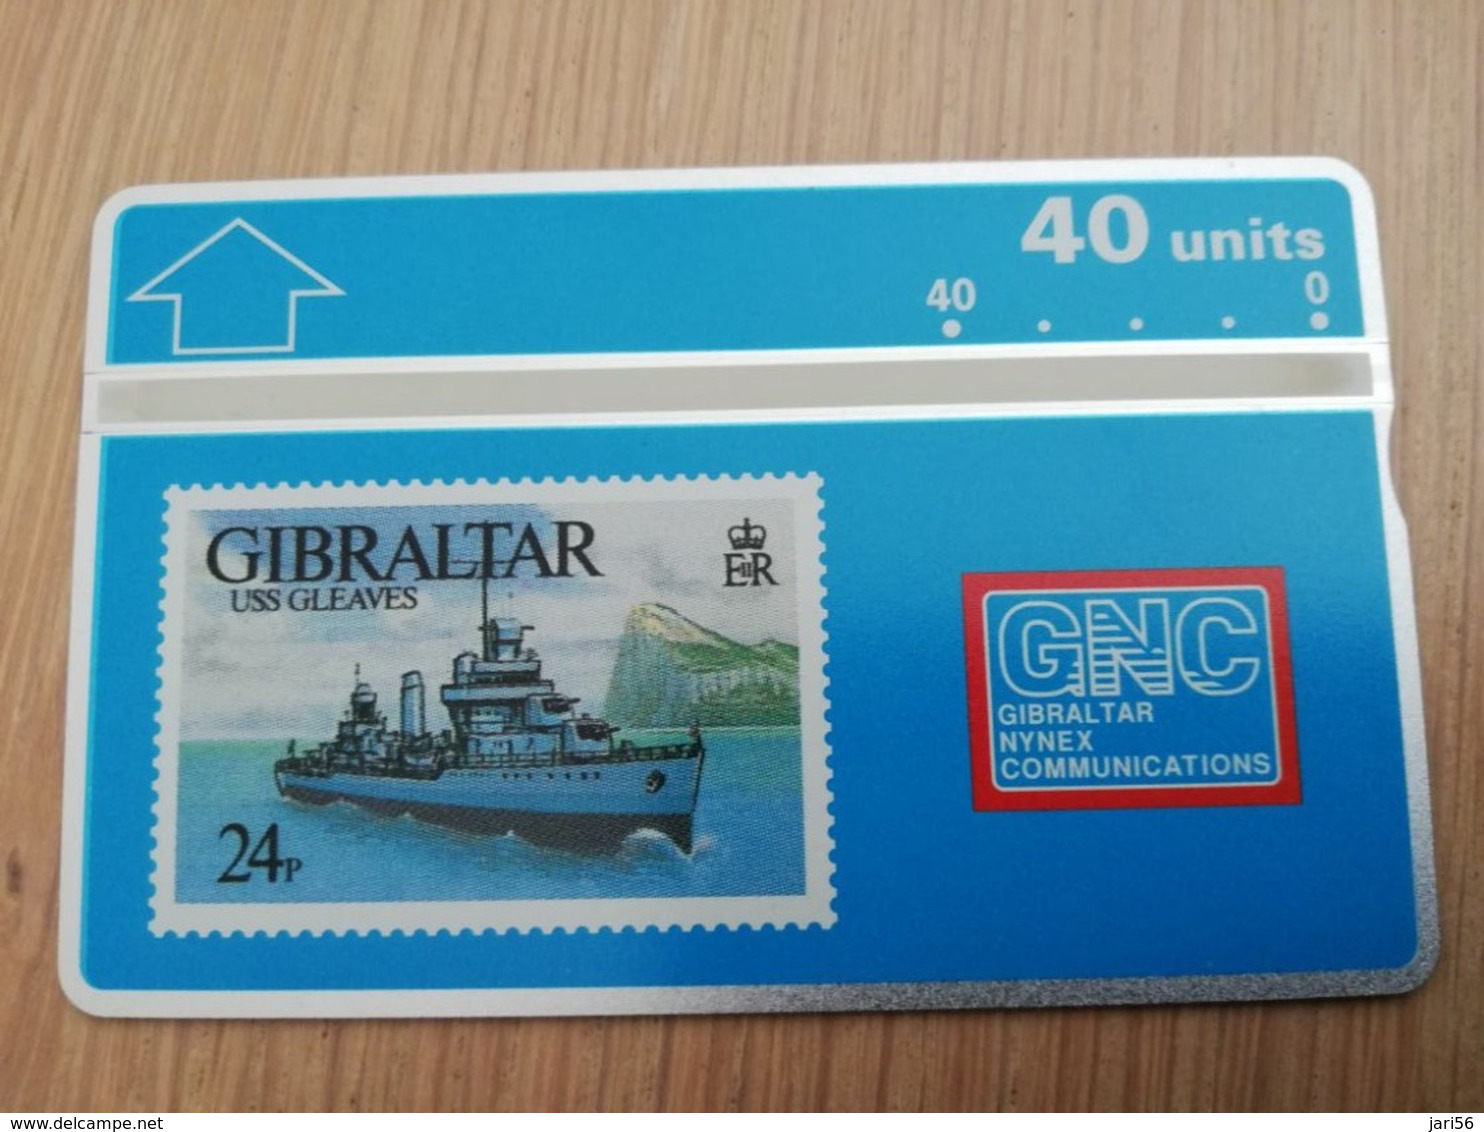 GIBRALTAR  LANDYS & GYR  40 UNITS MINT USS GLEAVES,STAMP ON CARD   **2991 ** - Gibraltar